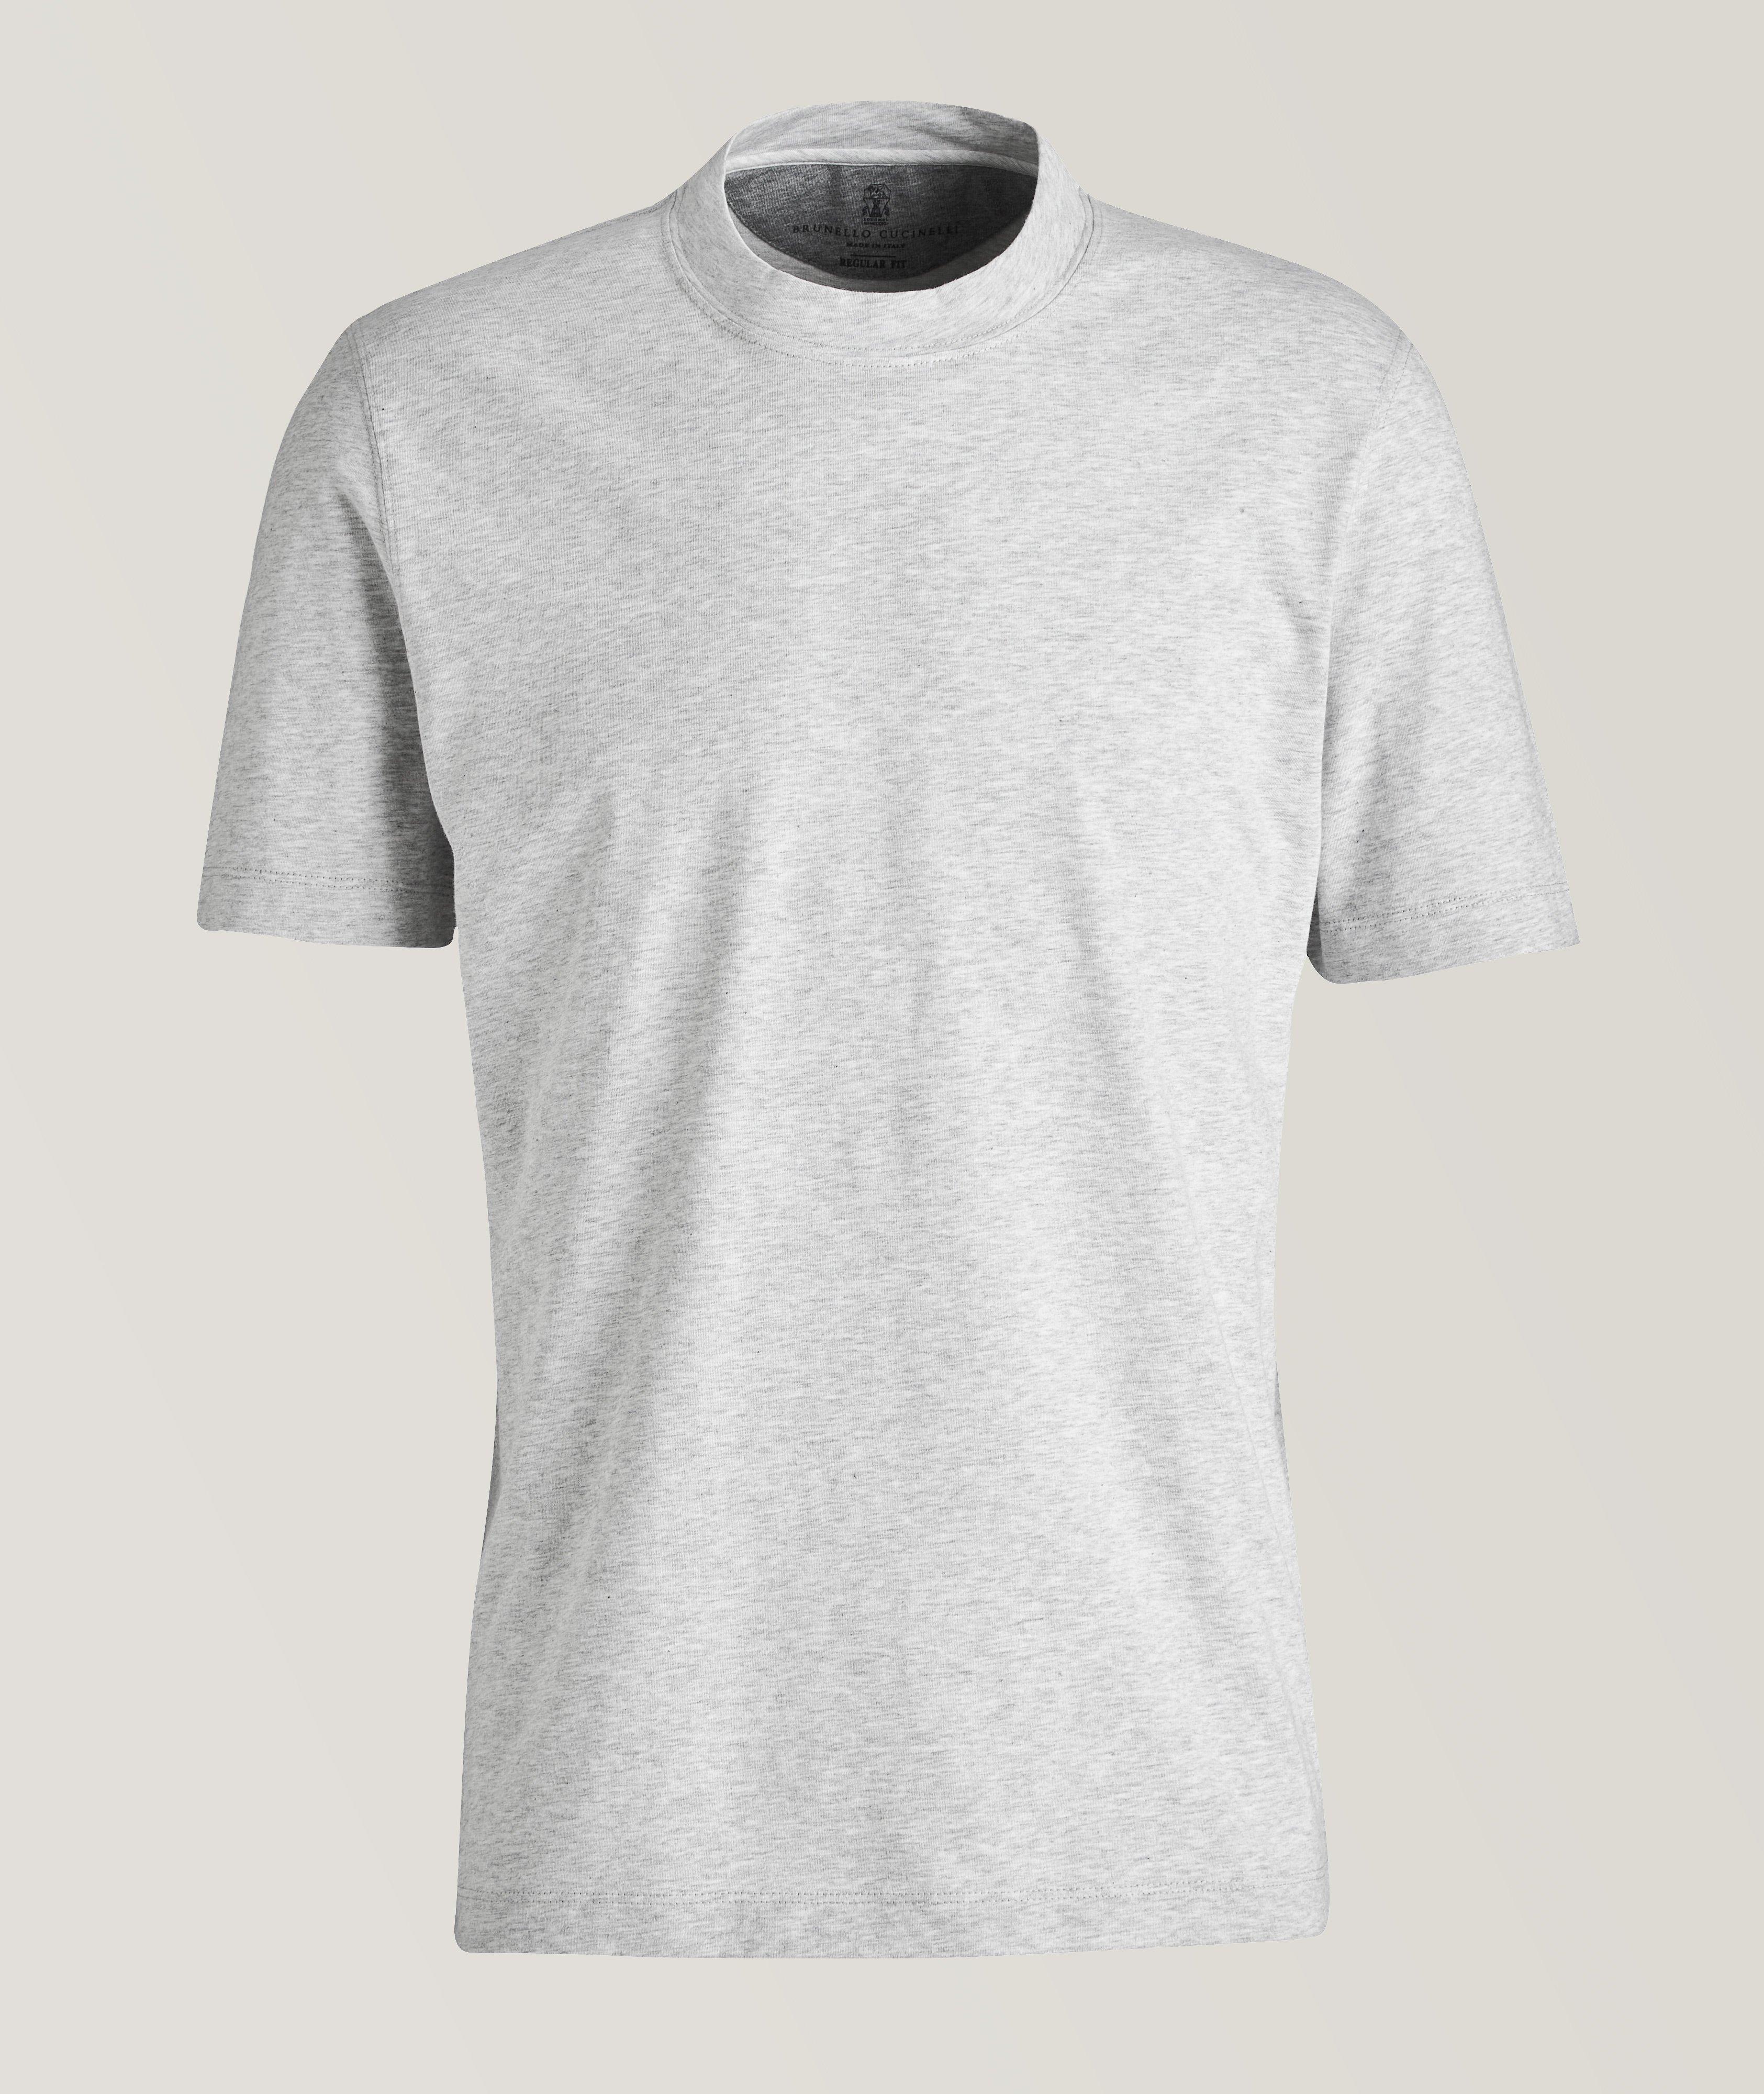 Jersey Cotton T-Shirt image 0